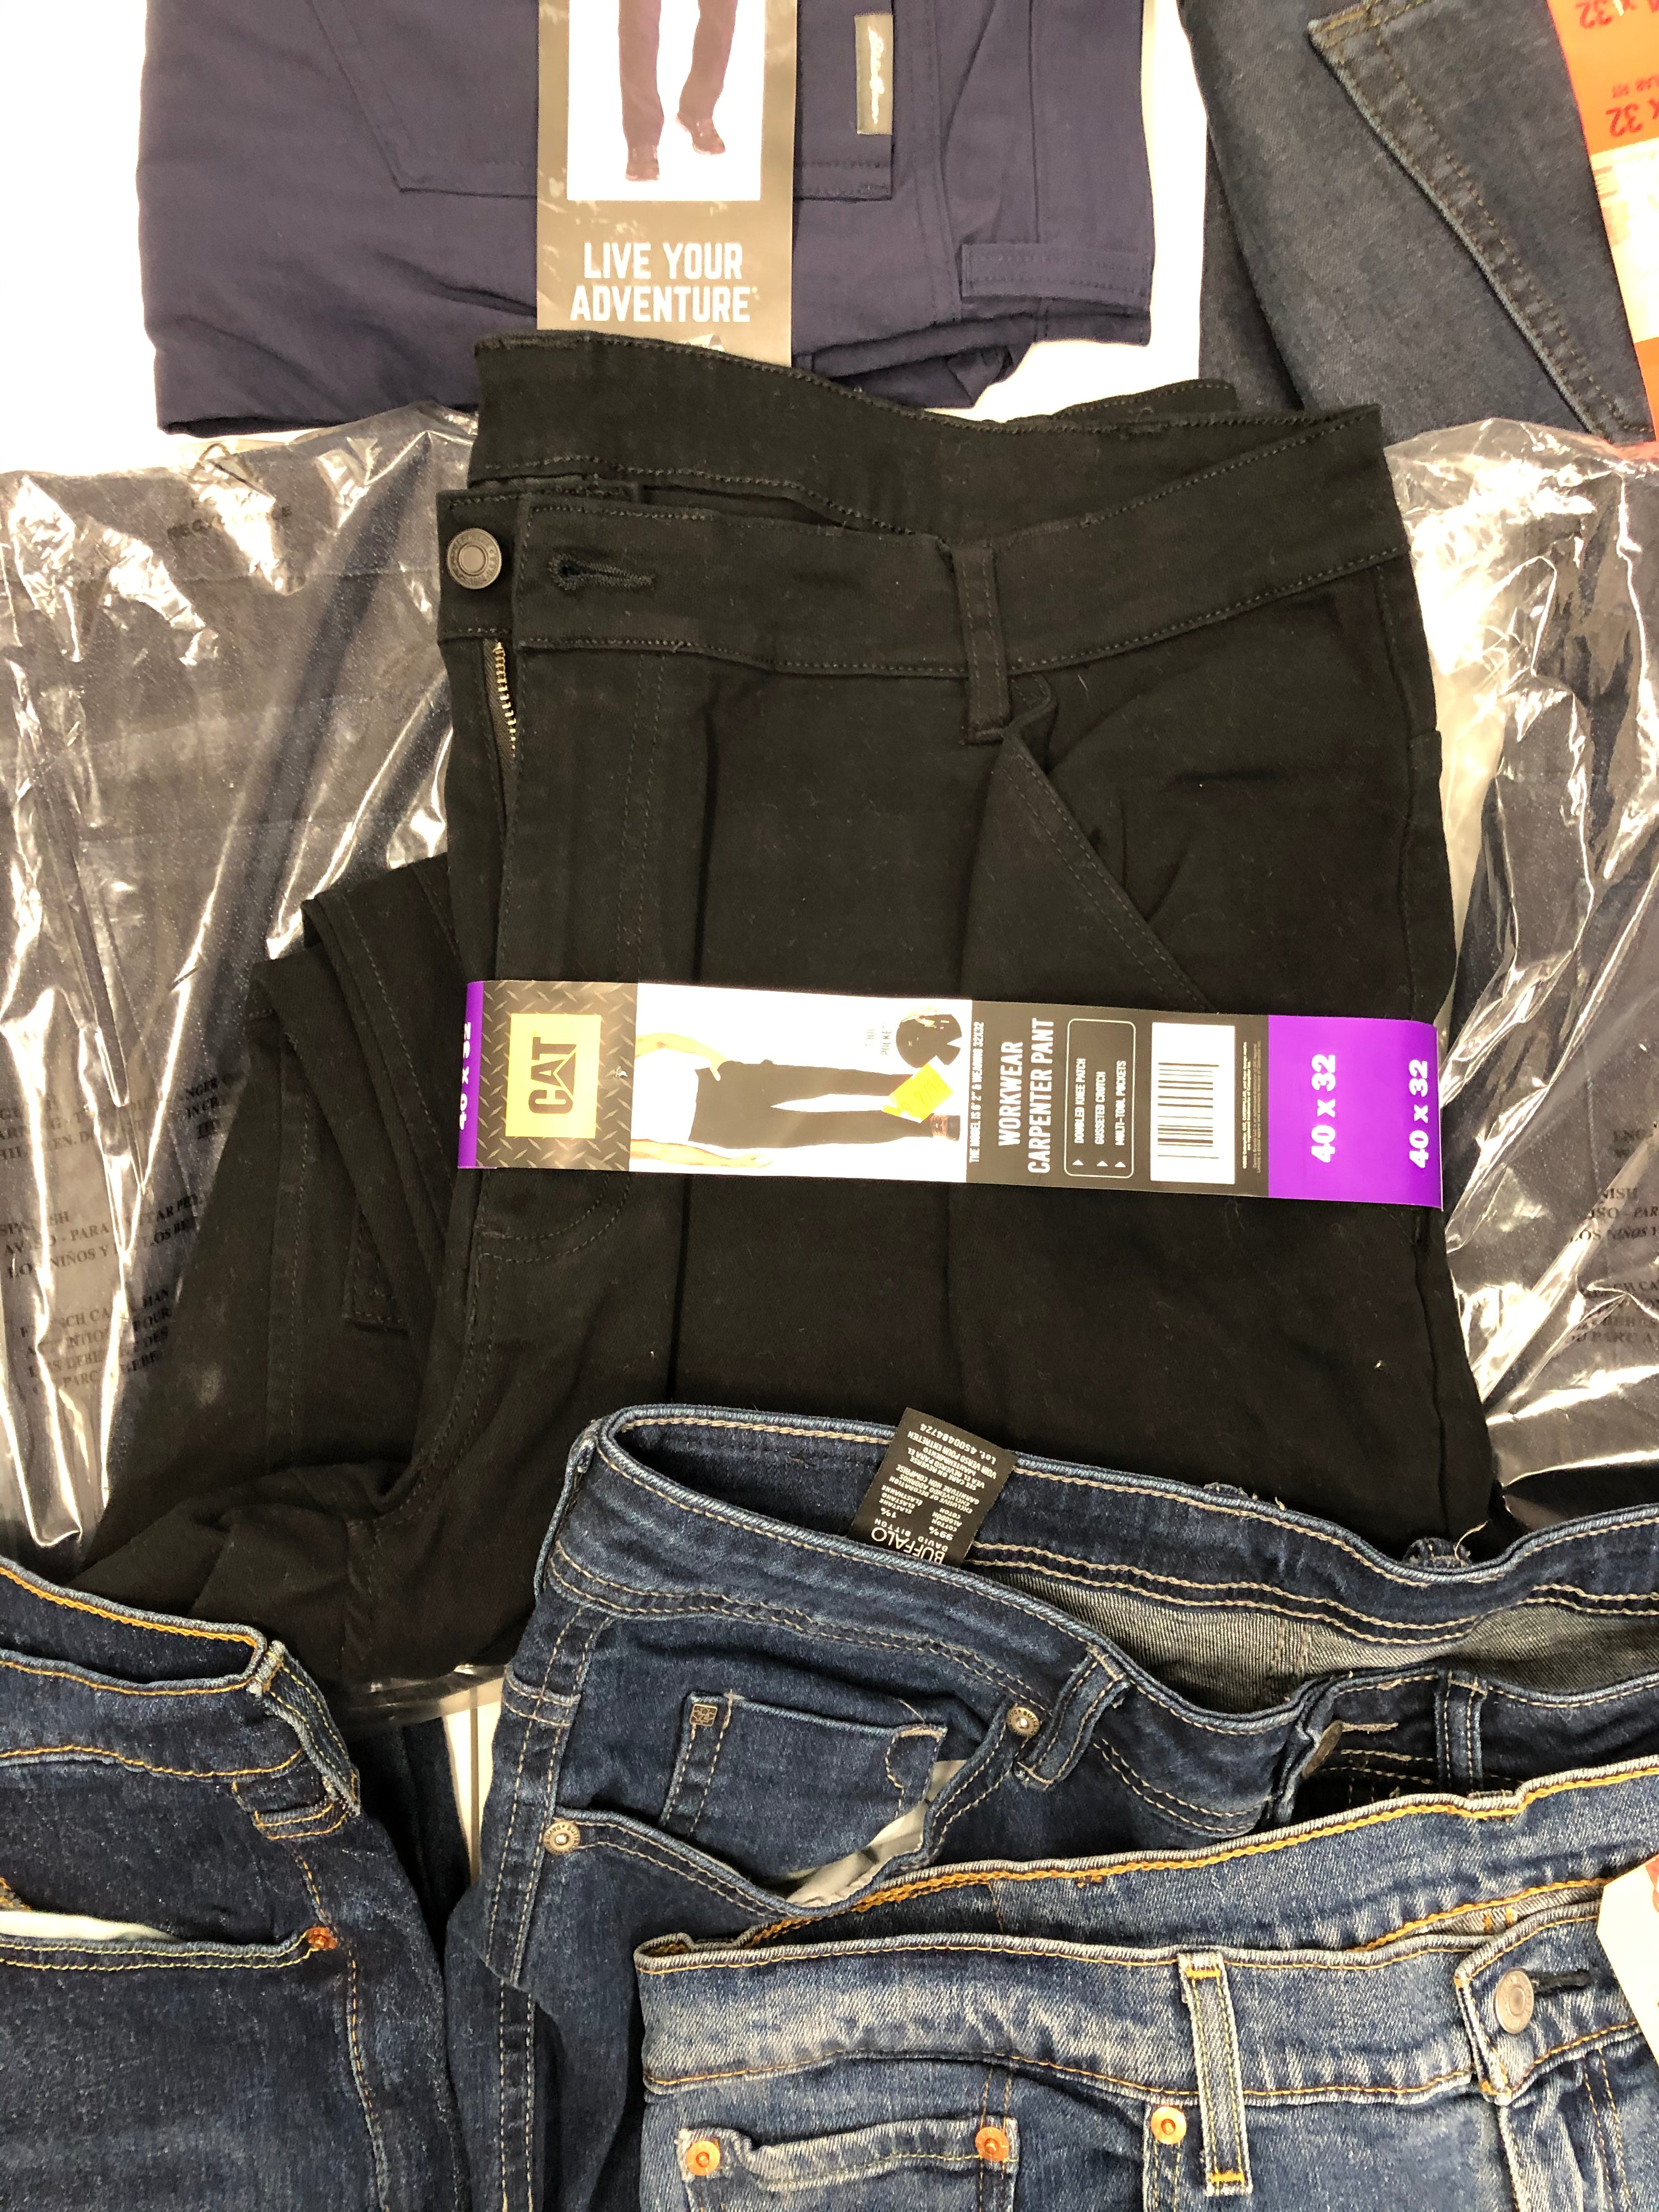 Men's Clothing Pants & Jeans Wholesale Lot, LUCKY BRAND, KIRKLAND